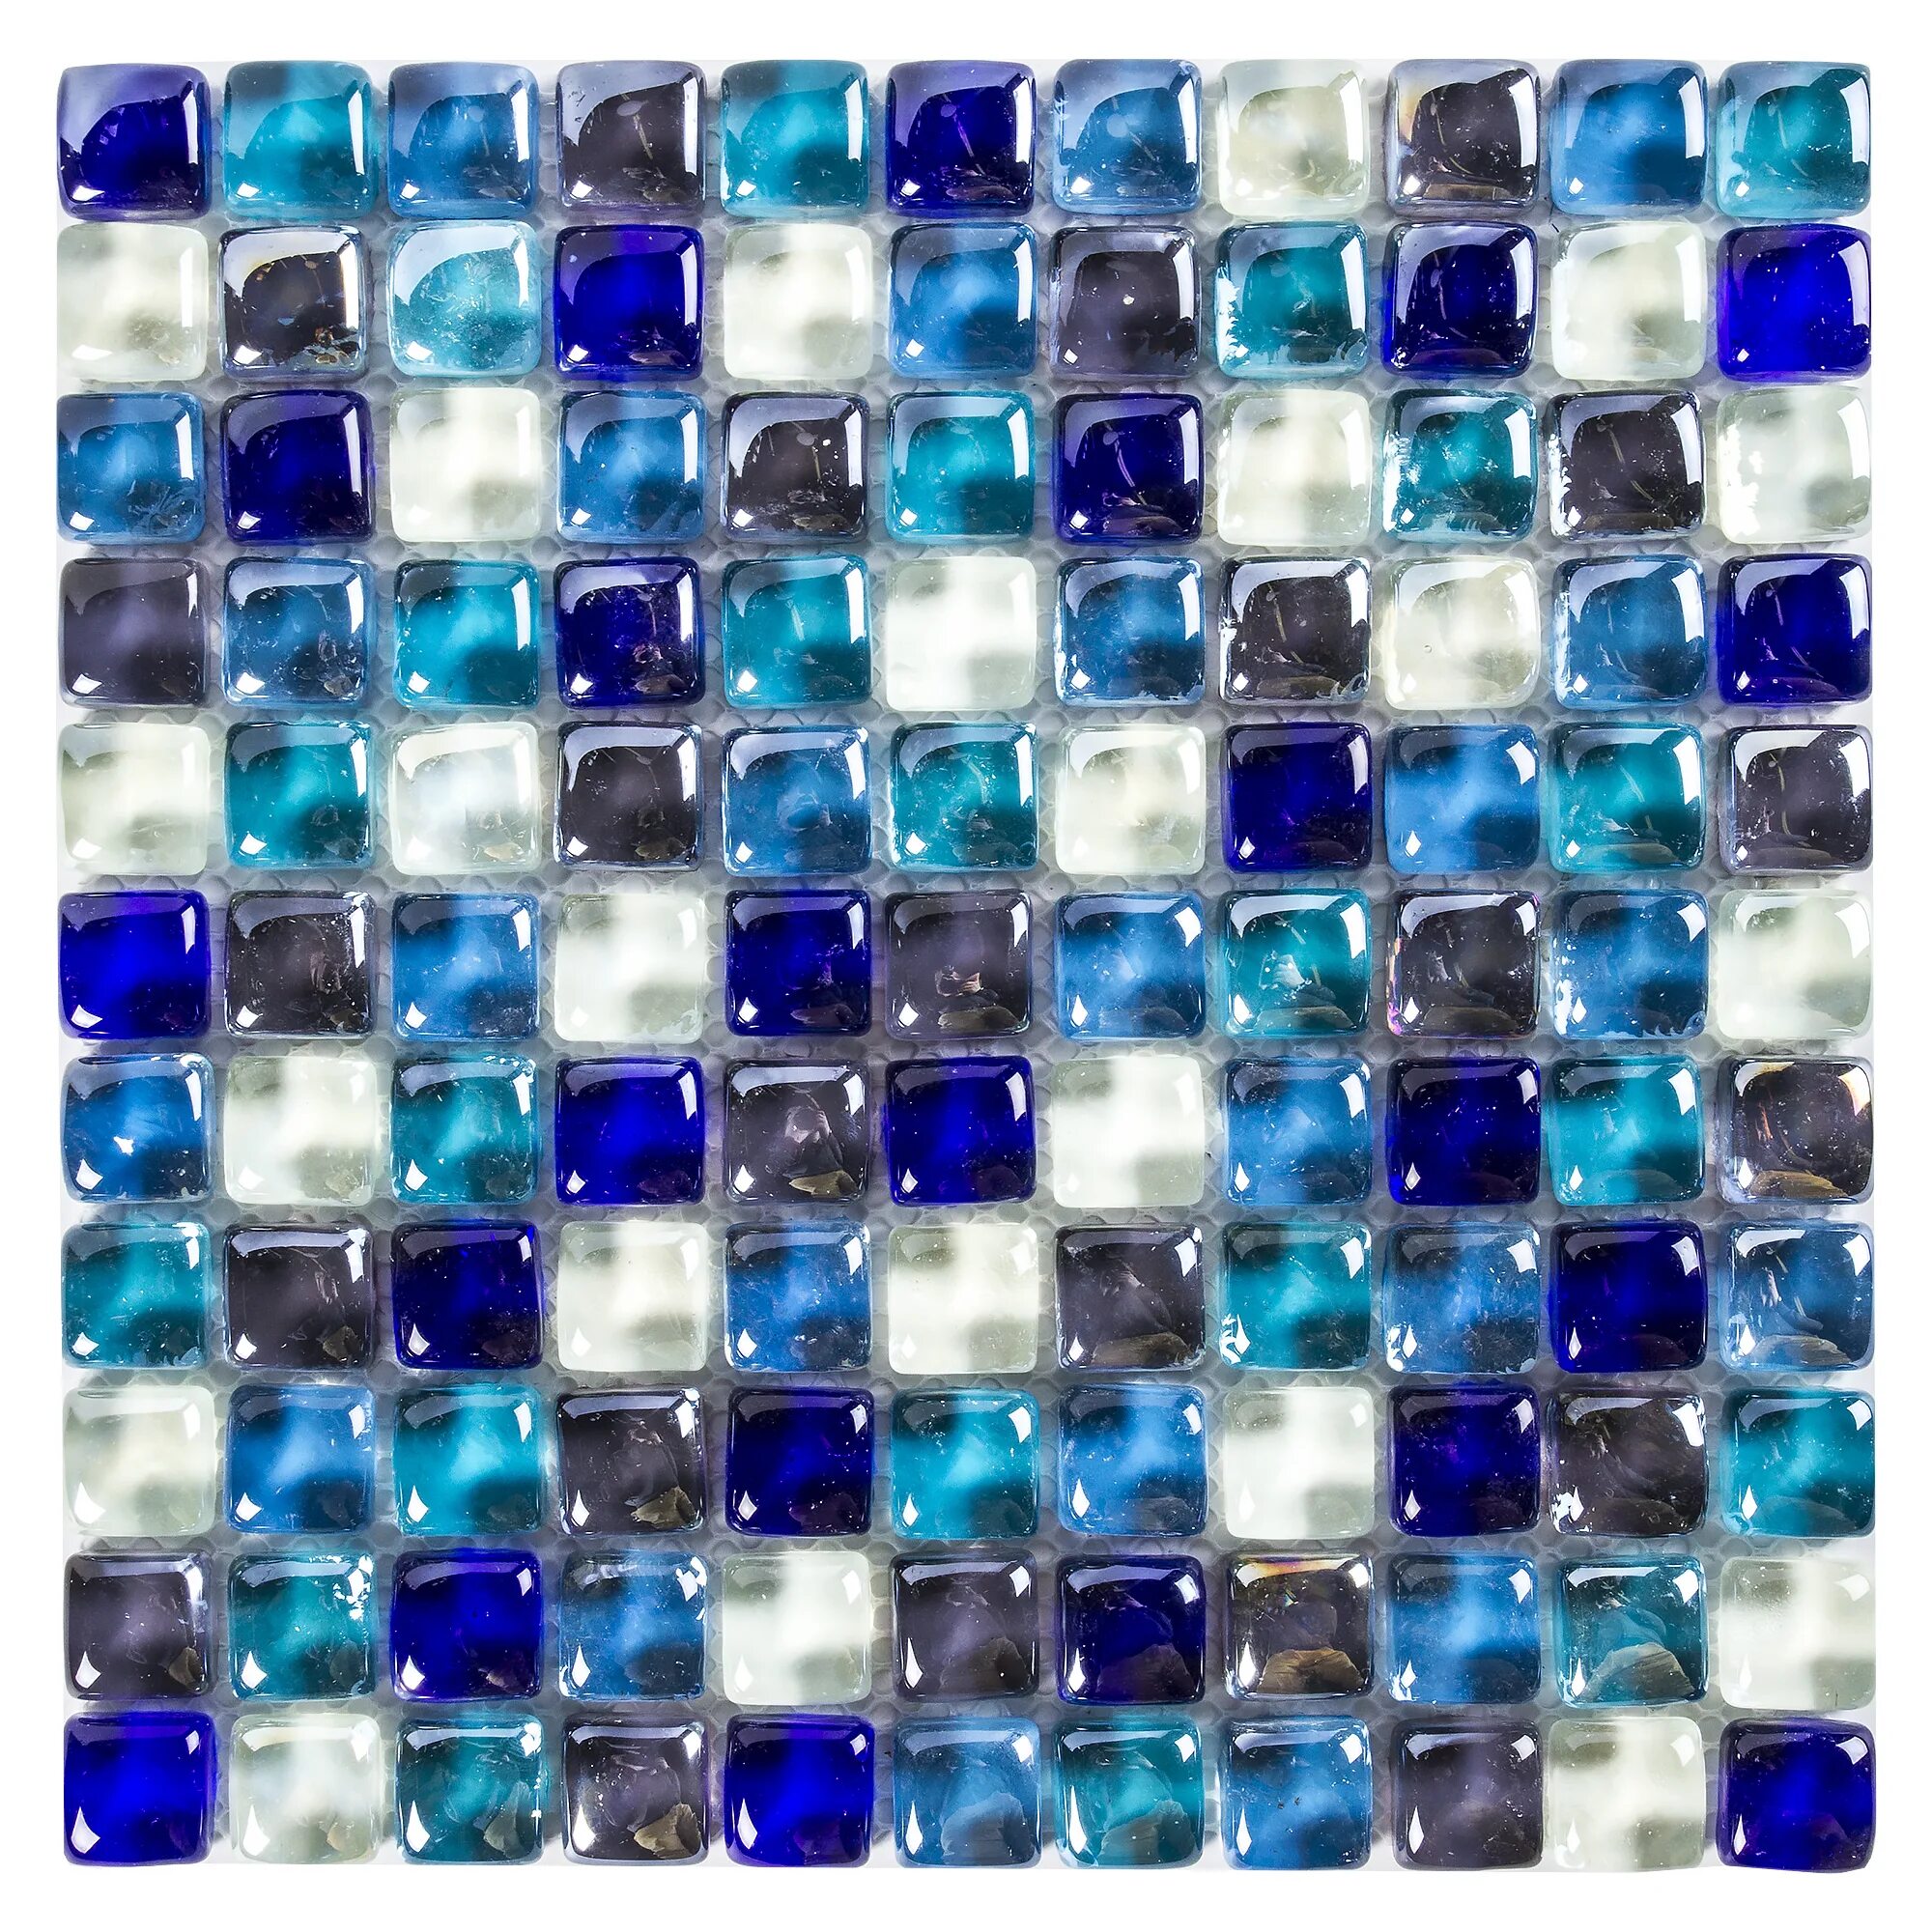 Мозаики цена за м2. Artens Shaker мозаика 30х30 голубая. Мозаика Artens «Shaker» 30х30 см стекло цвет сине-голубой. Стеклянная мозаика в Леруа Мерлен. Artens 30х30.